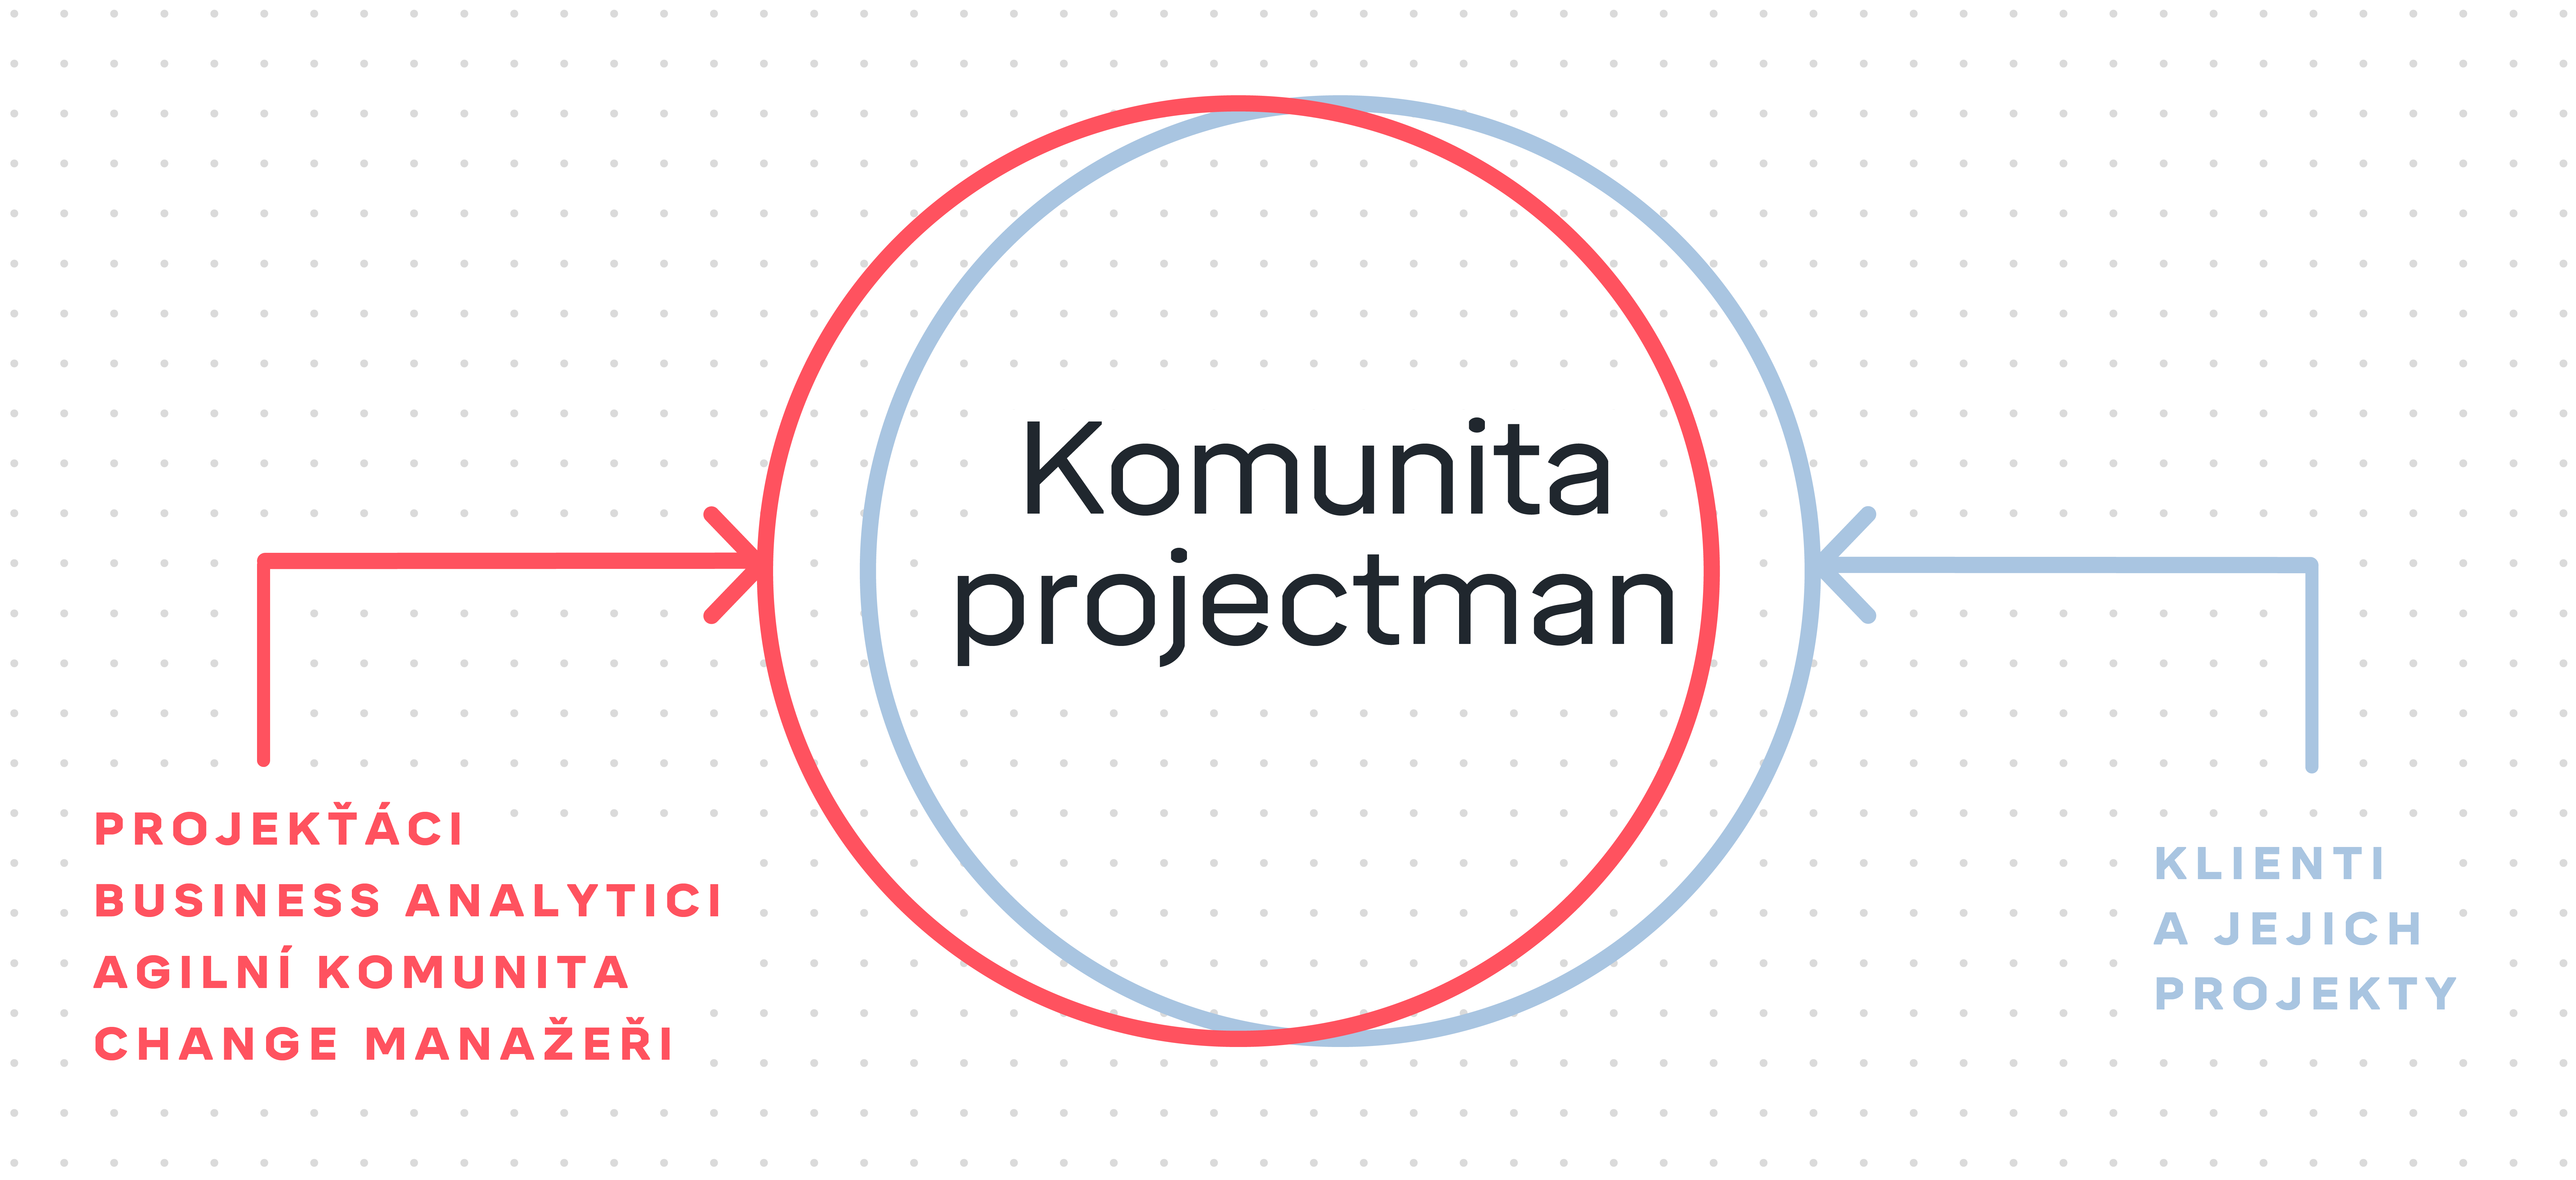 Projectman - pozice na trhu